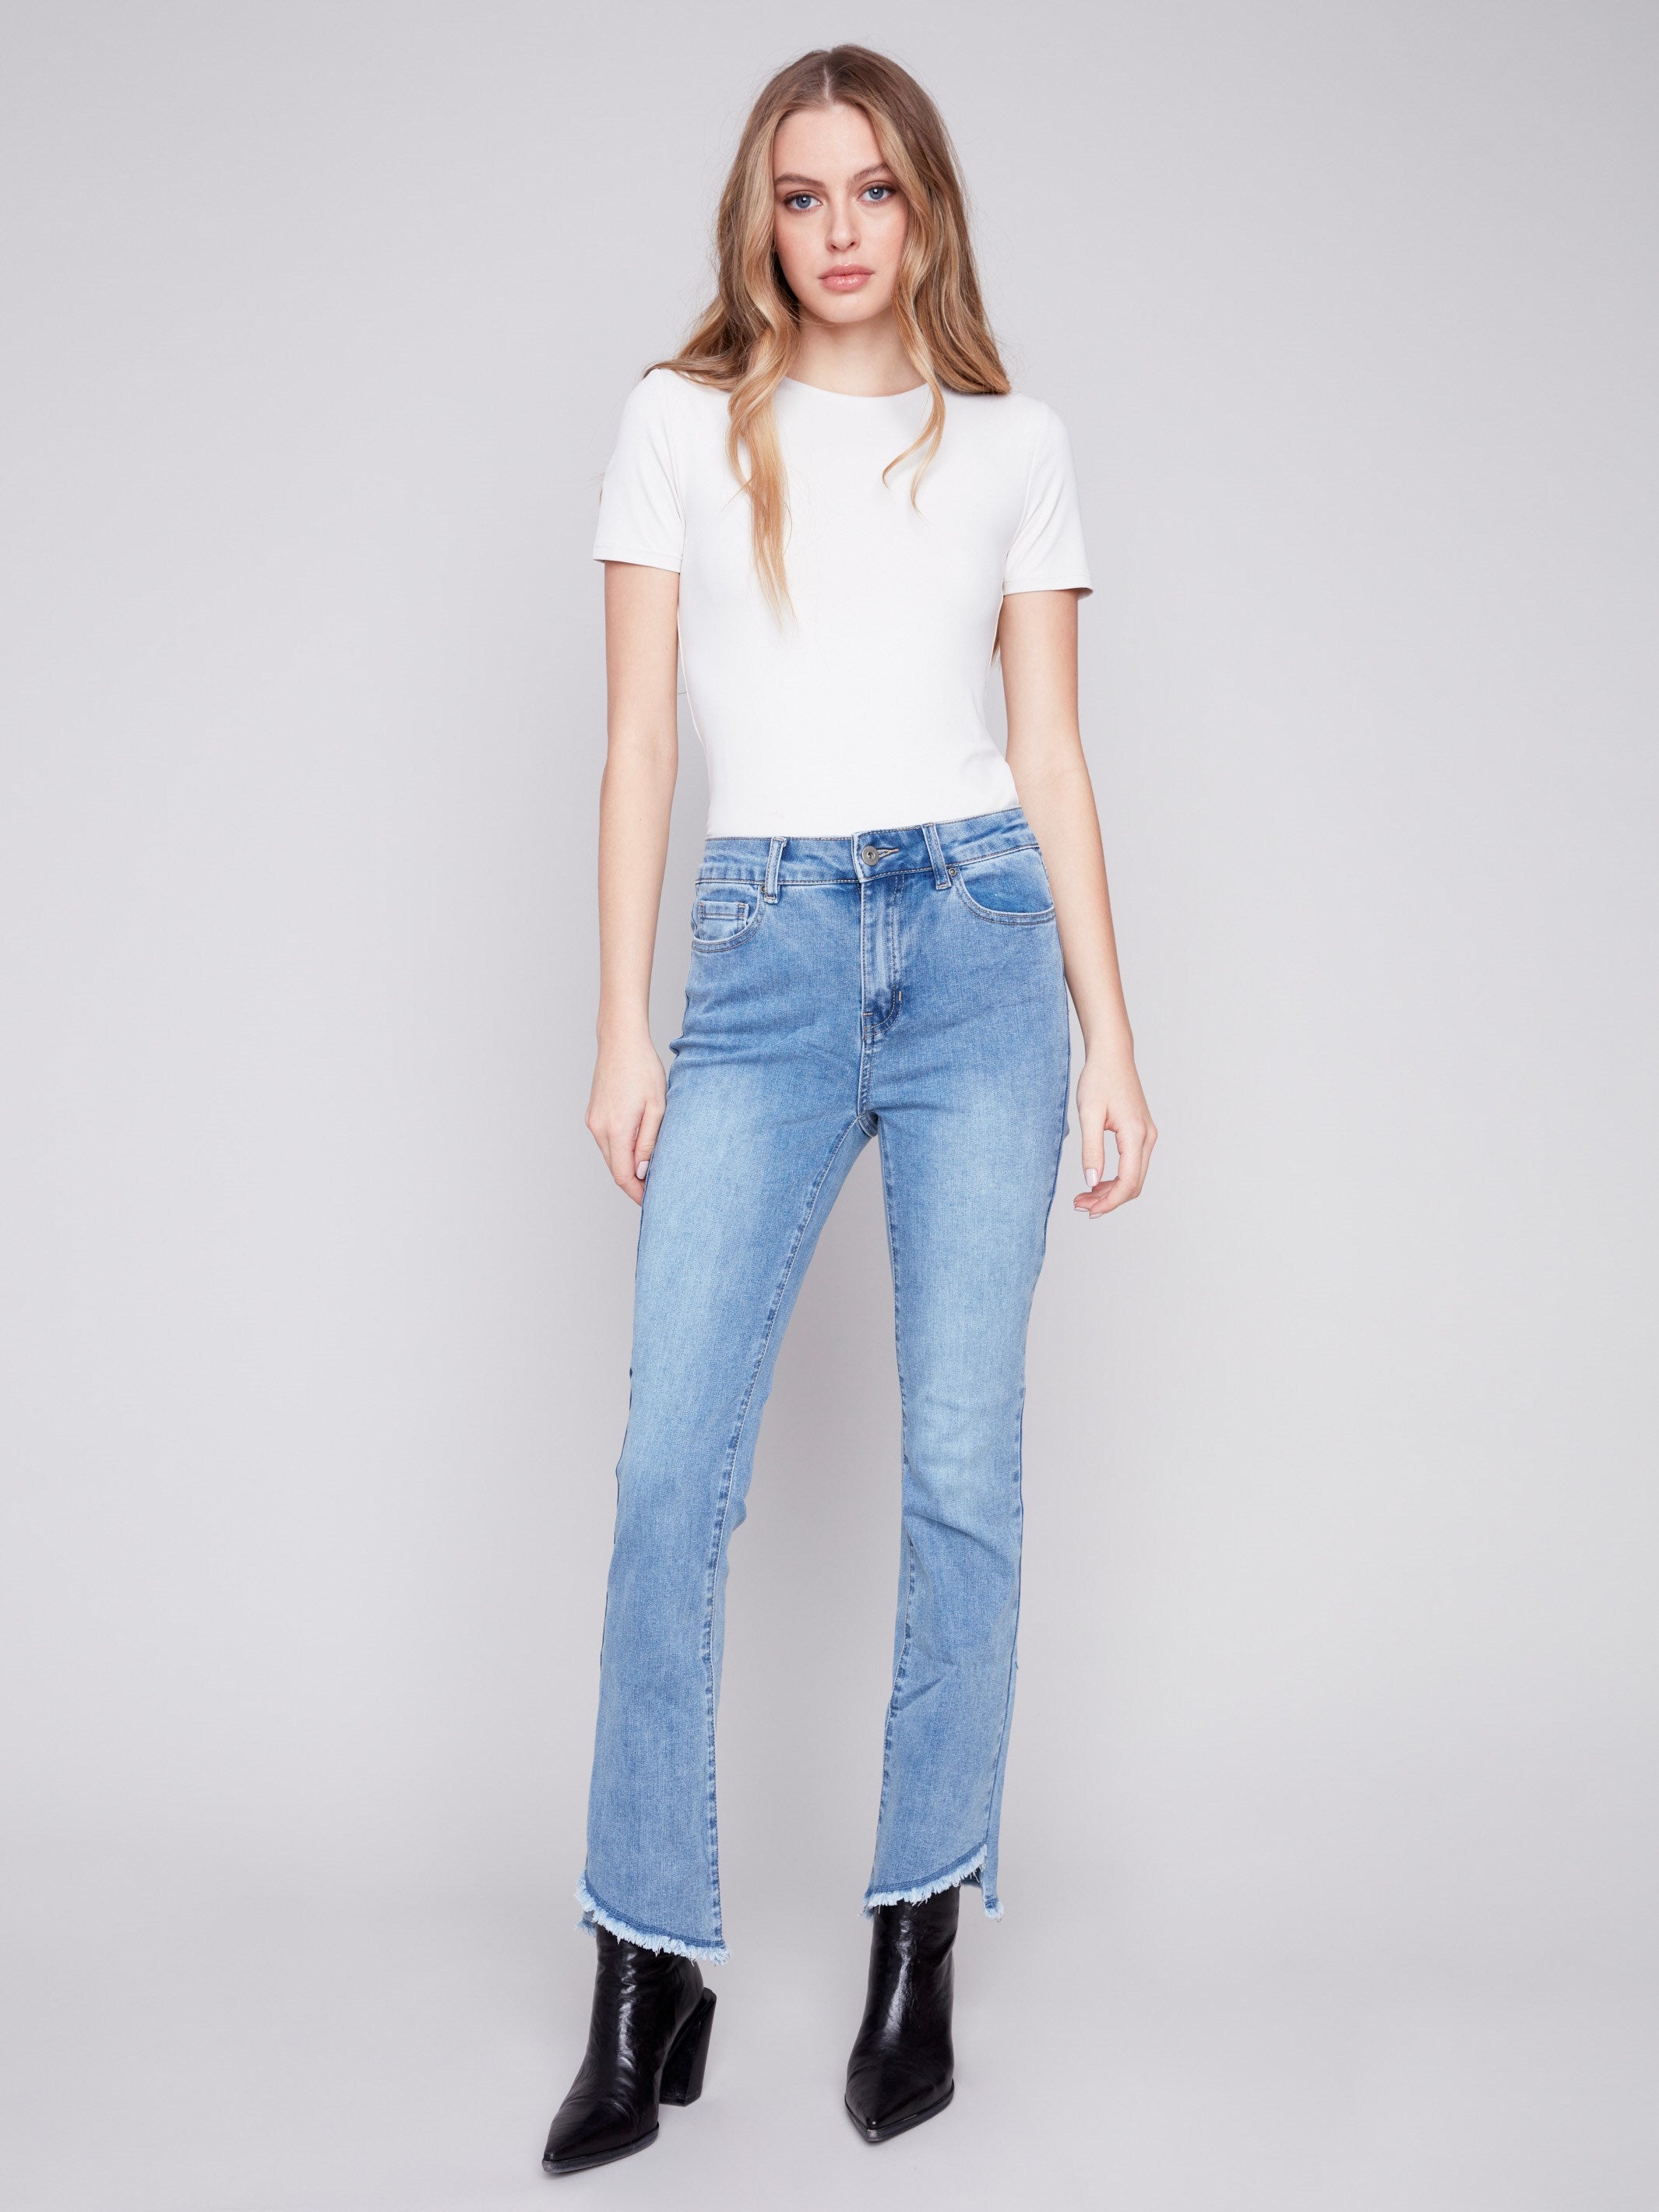 Charlie B Bootcut Jeans with Asymmetrical Hem - Light Blue - Image 5